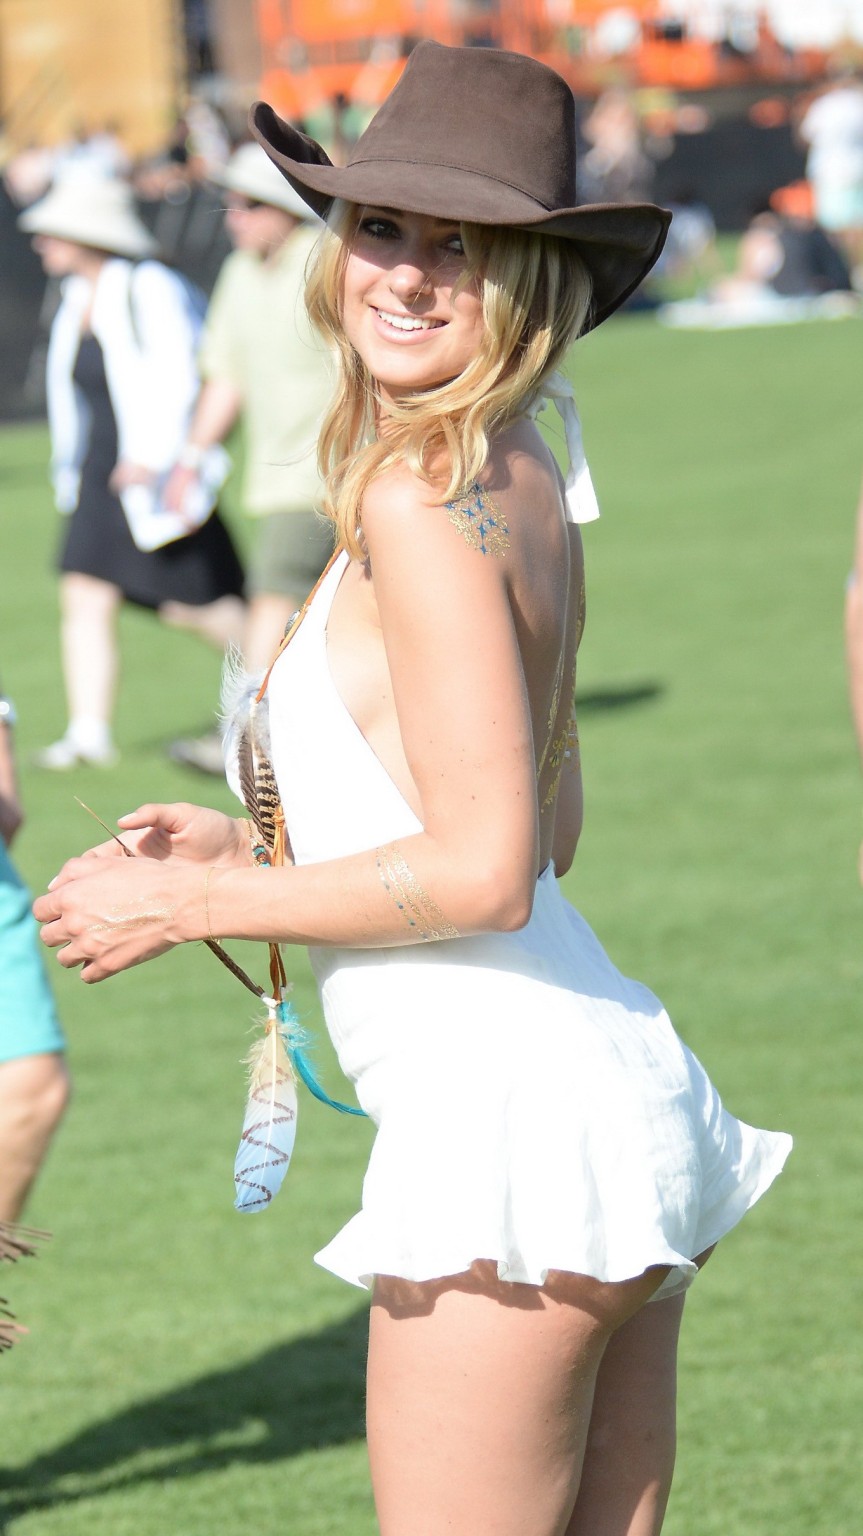 Kimberley garner panty peek and sideboob action in white mini dress at coachella
 #75167506